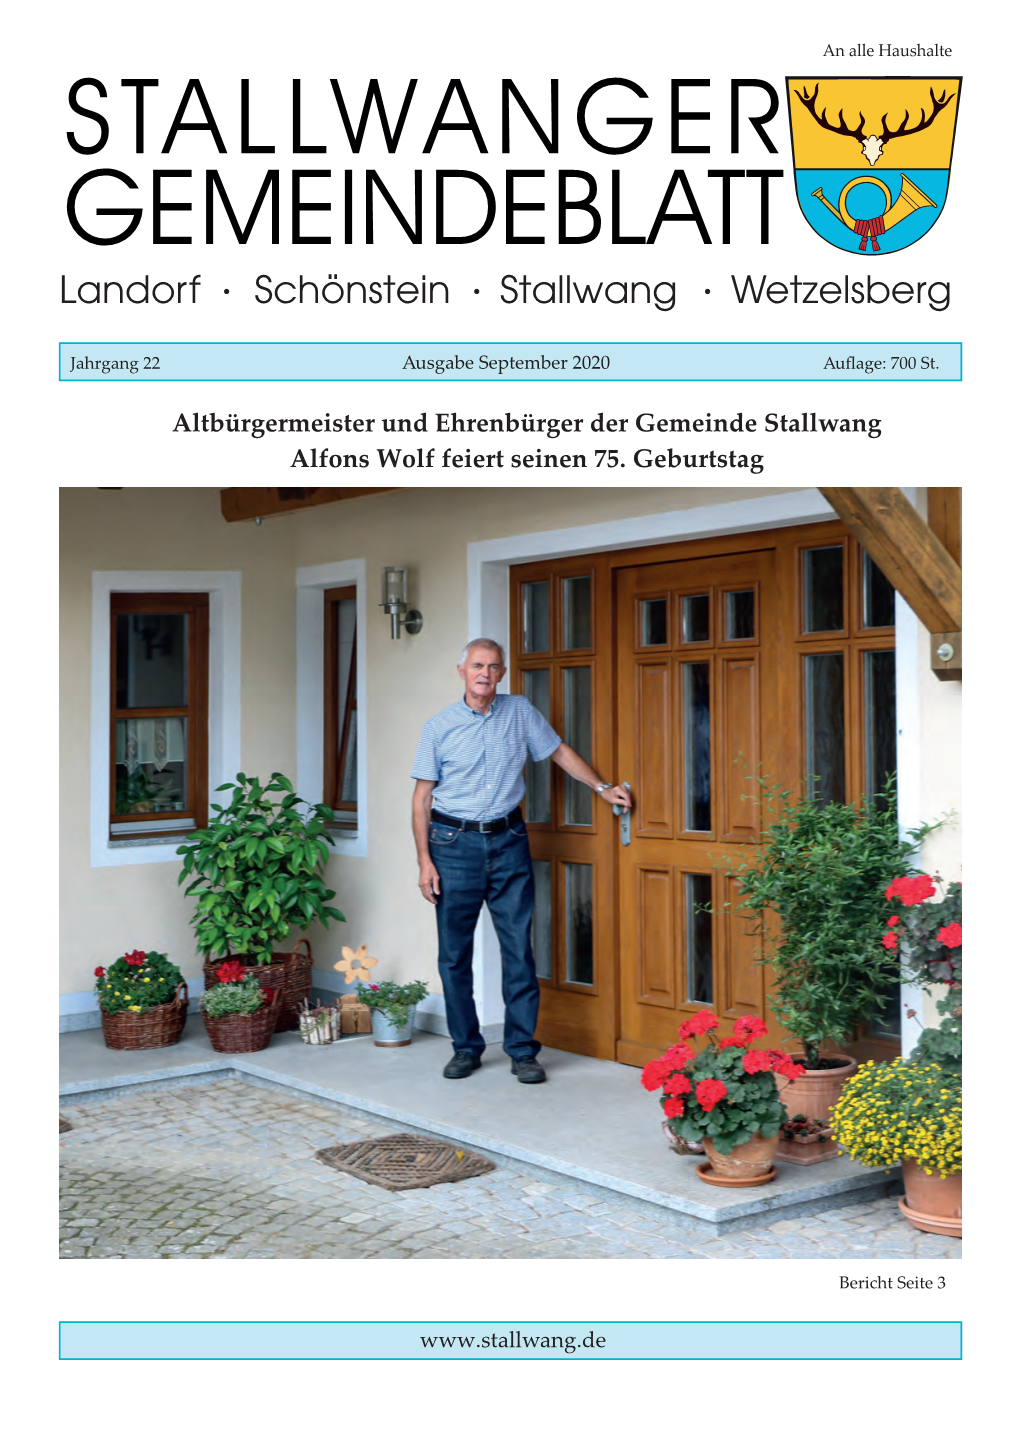 Stallwanger Gemeindeblatt